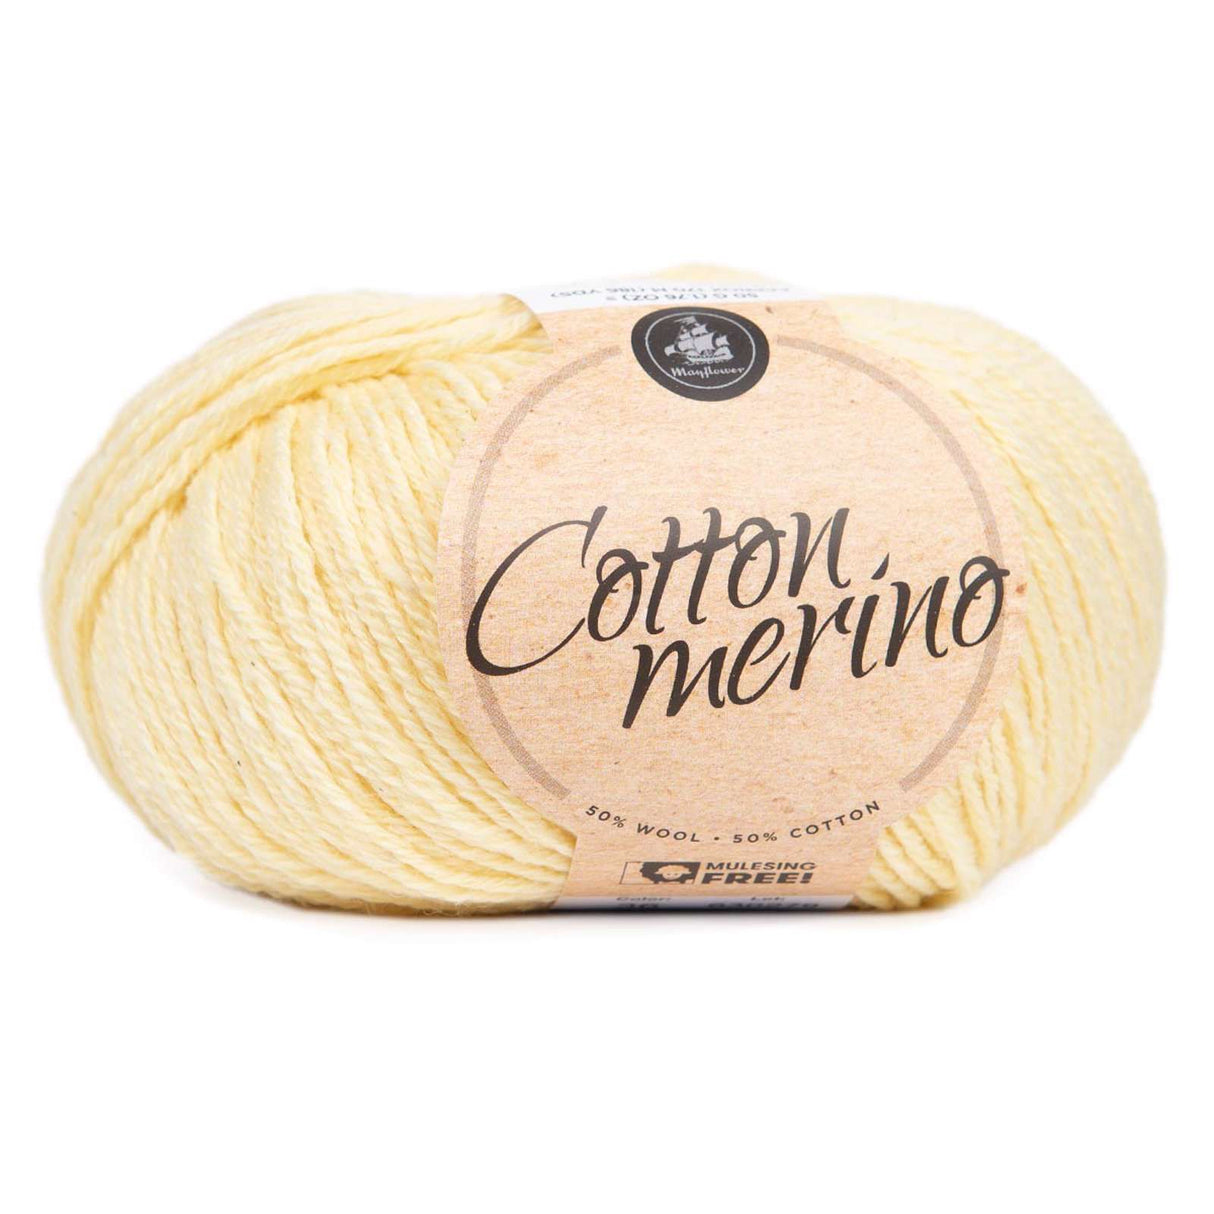 Cotton Merino